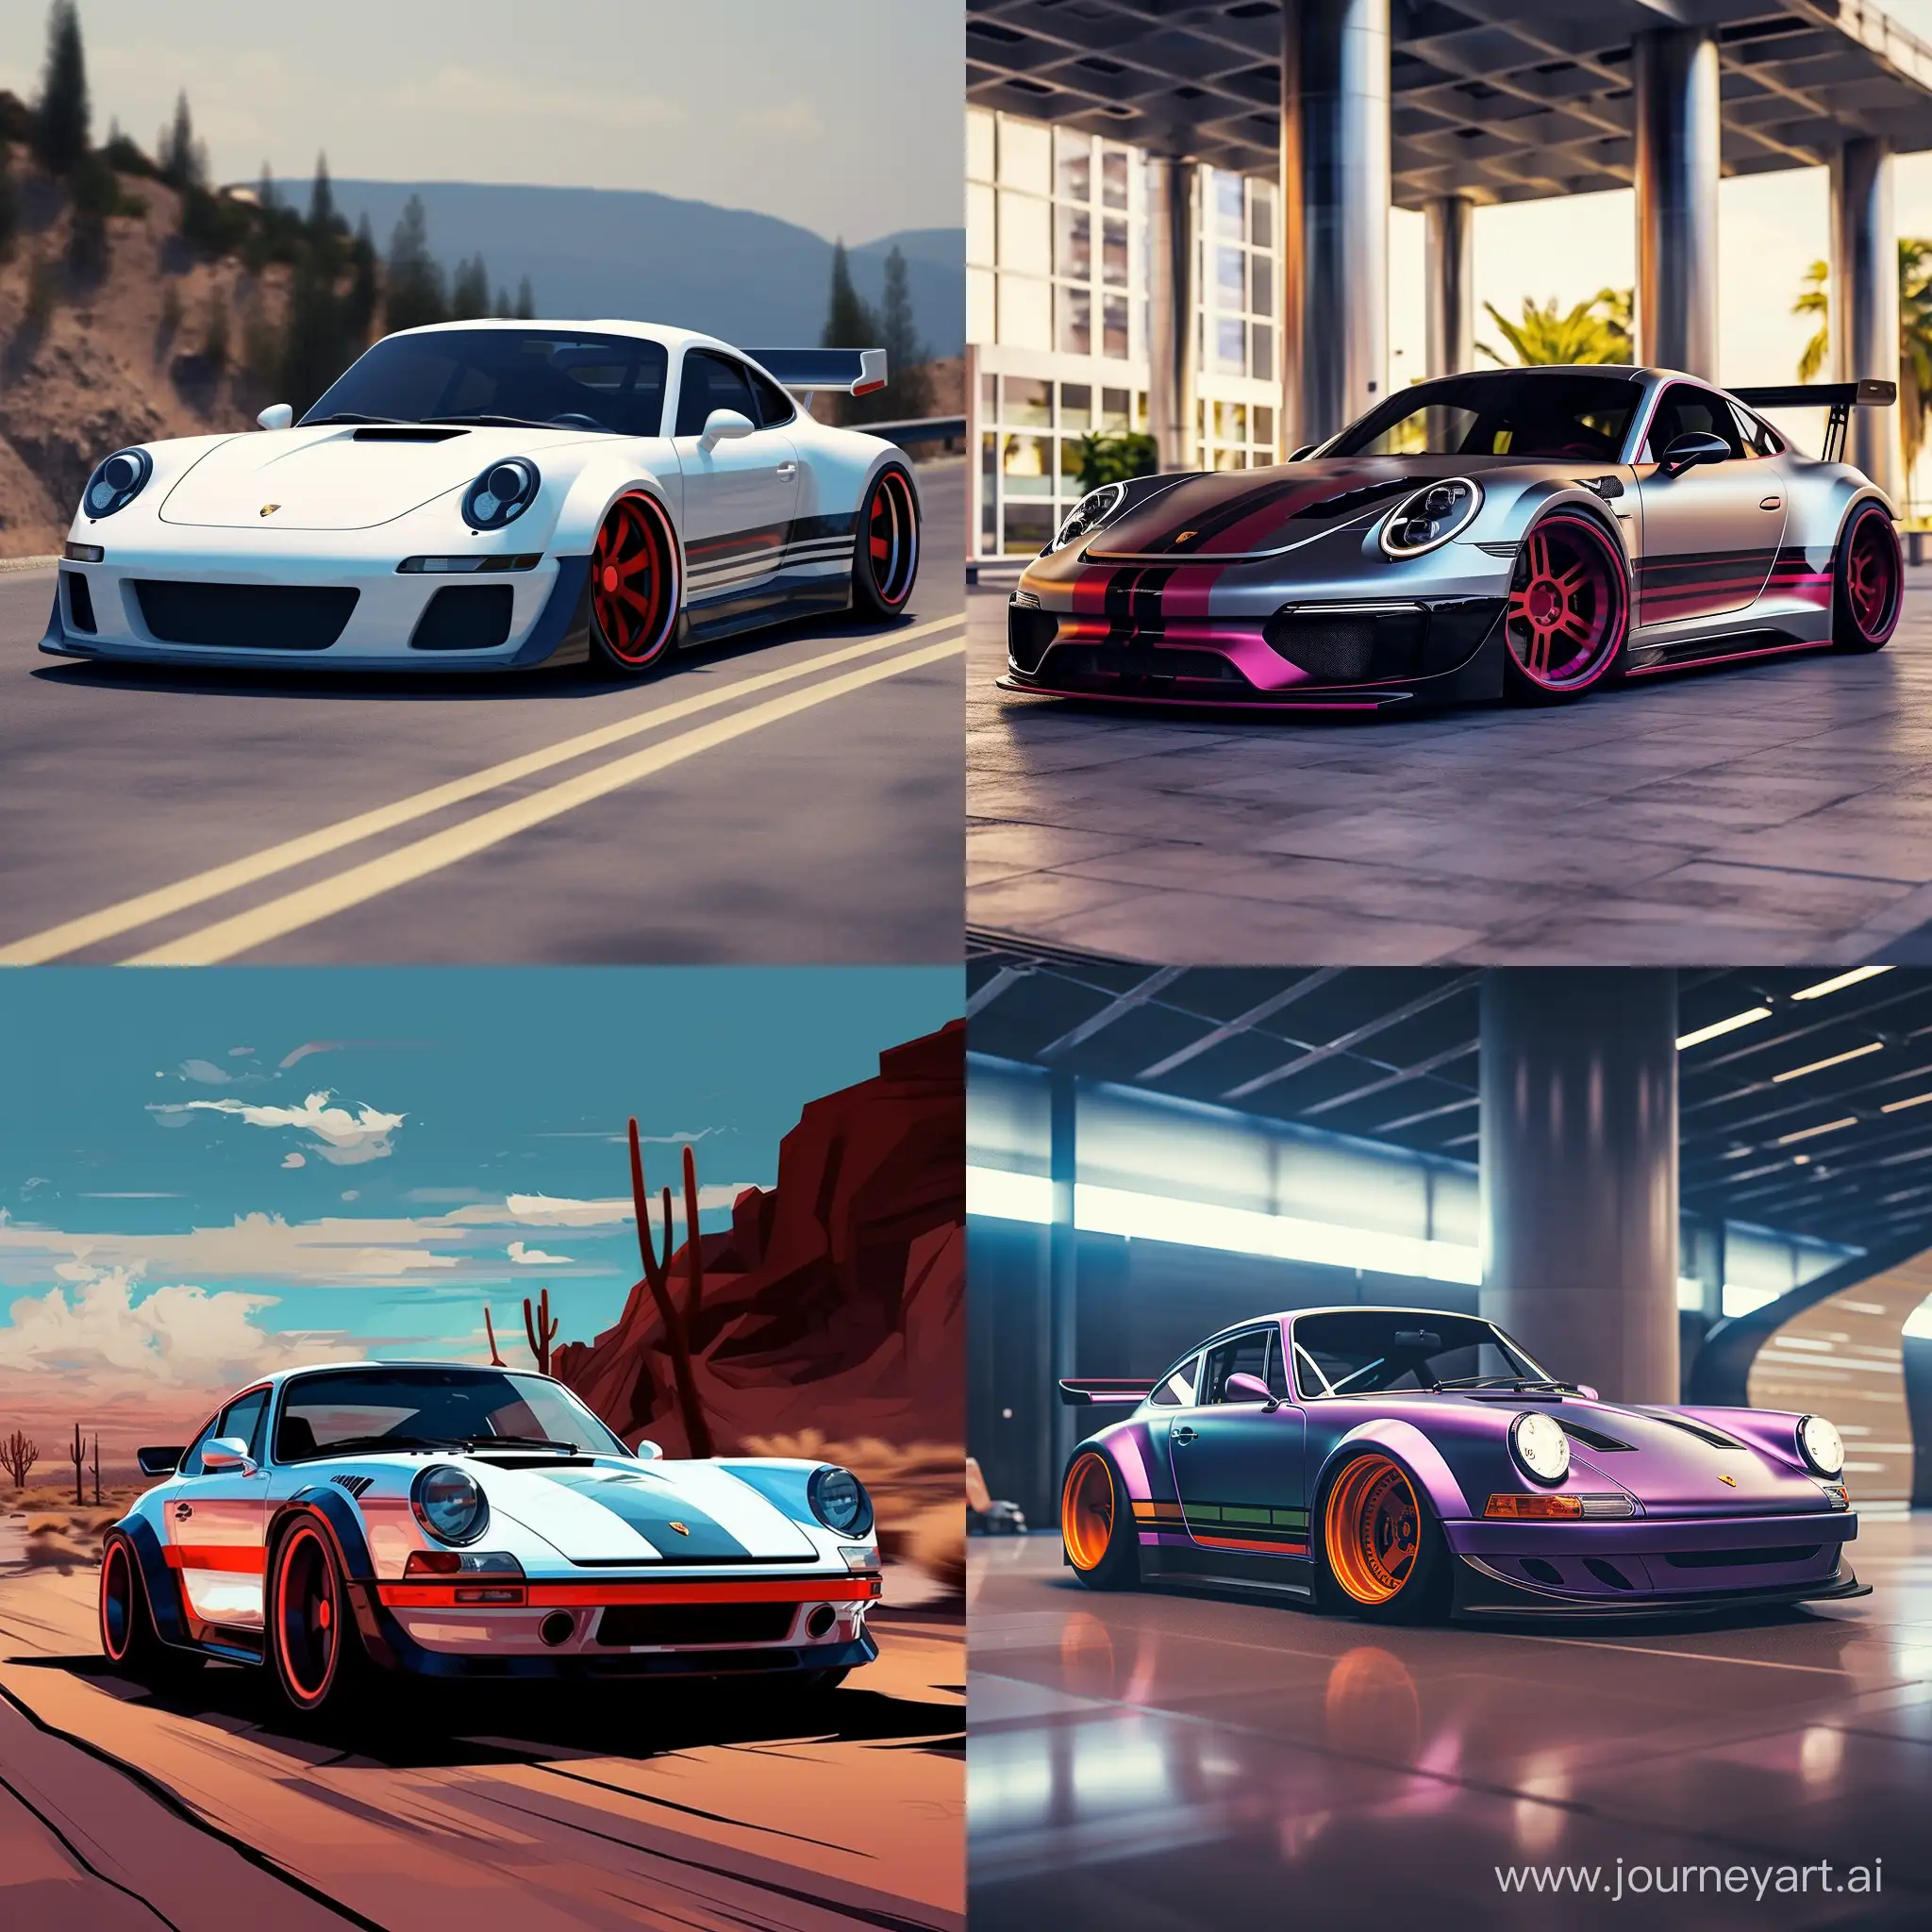 Sleek-Modern-Porsche-911-Revs-Up-in-Speed-Racers-Mach-1-Colors